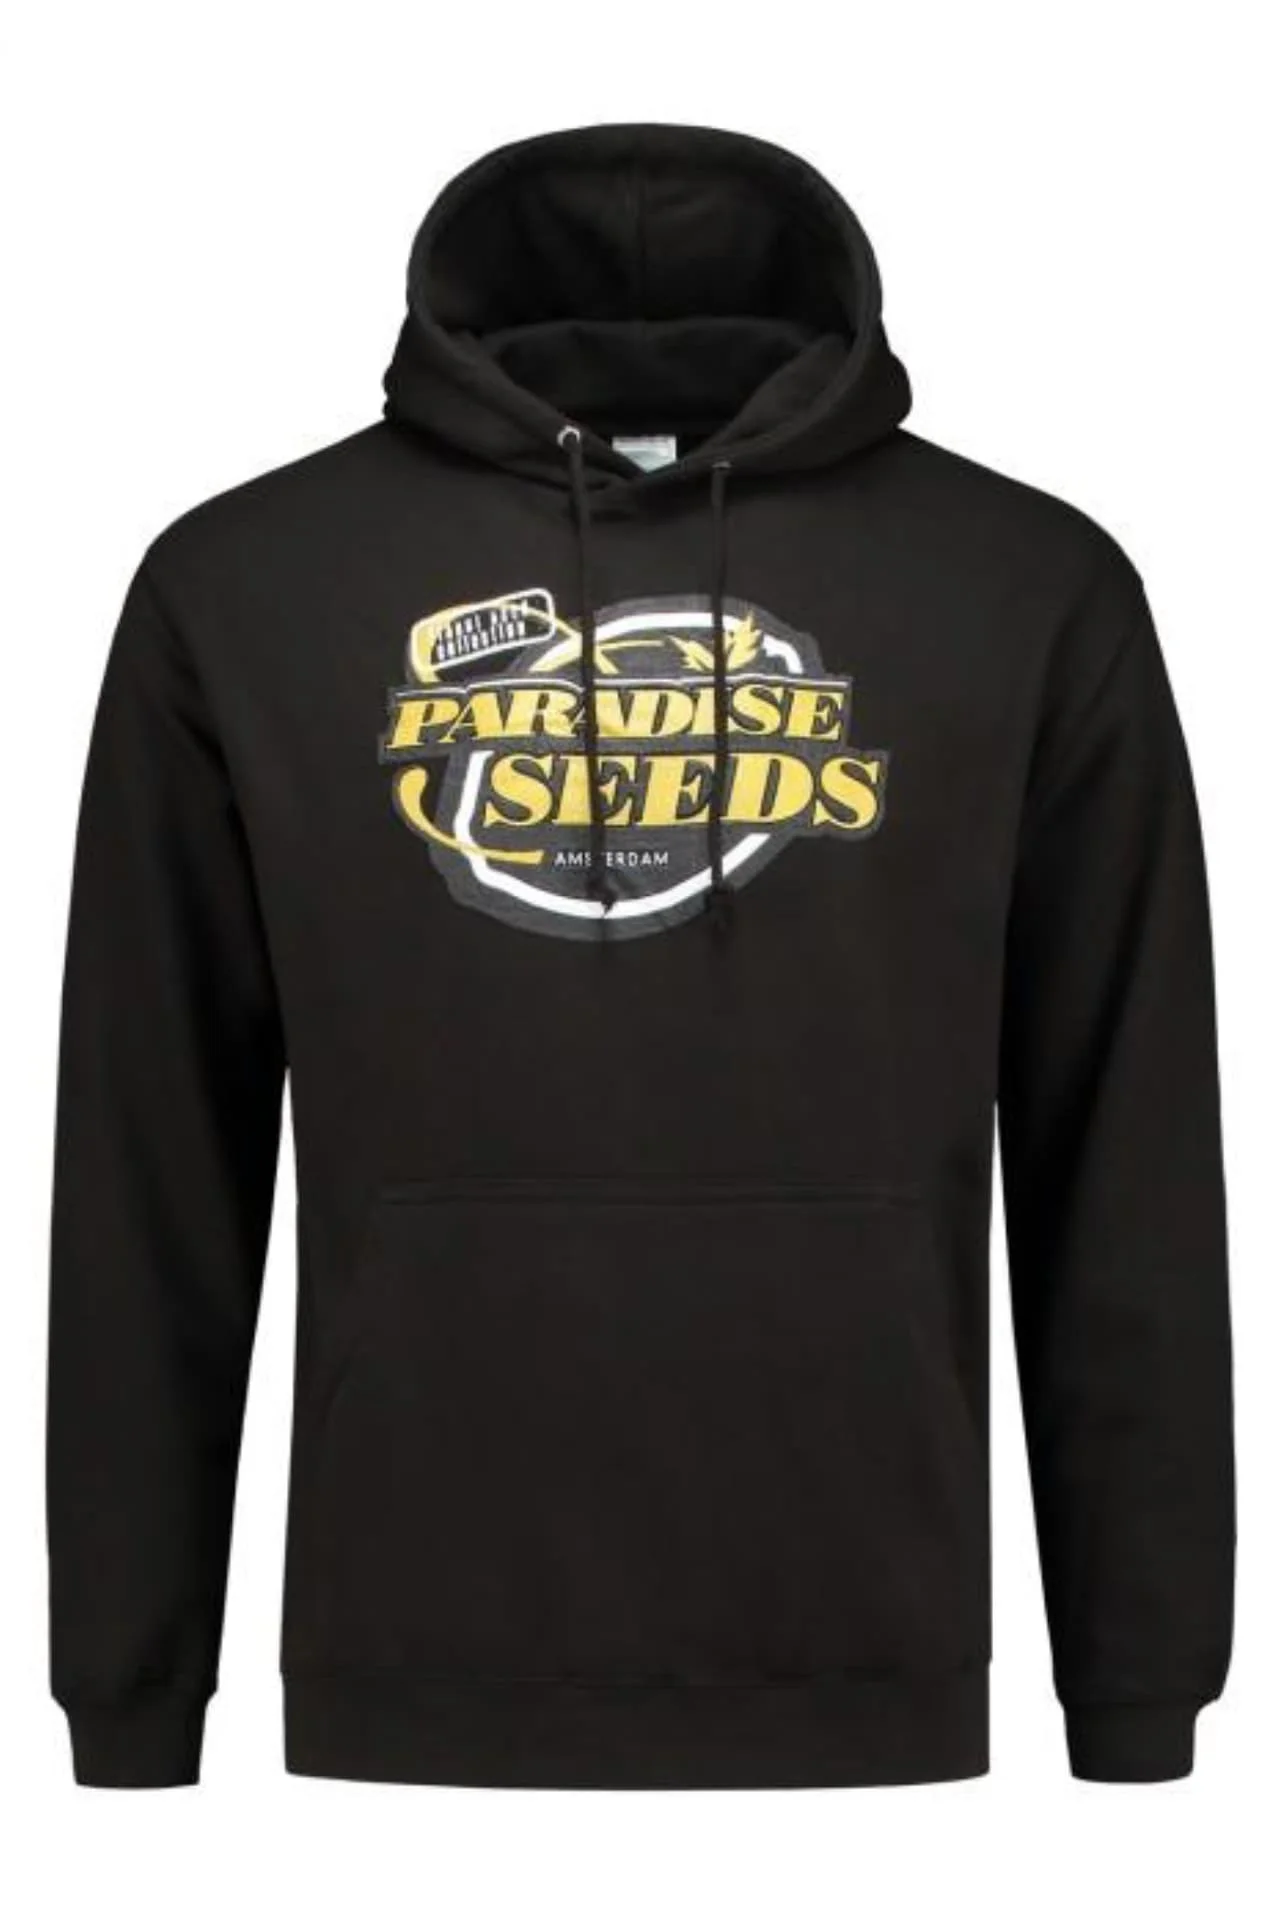 Sudadera con capucha (hoodie) VIEJO logo Paradise Seeds | Paradise Seeds Webshop